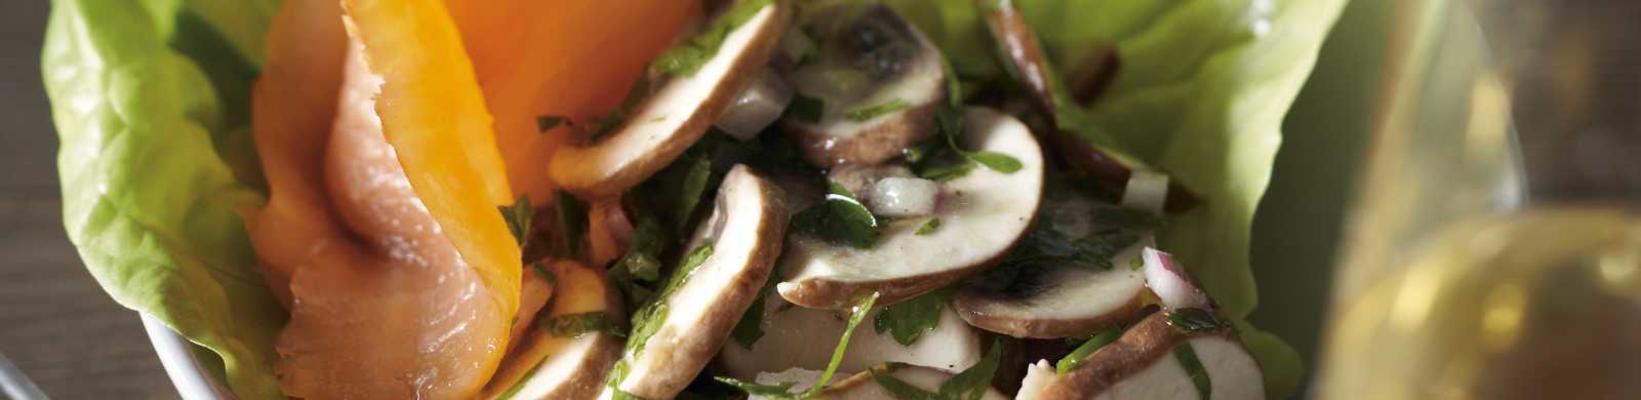 salad of mushrooms and fresh herbs